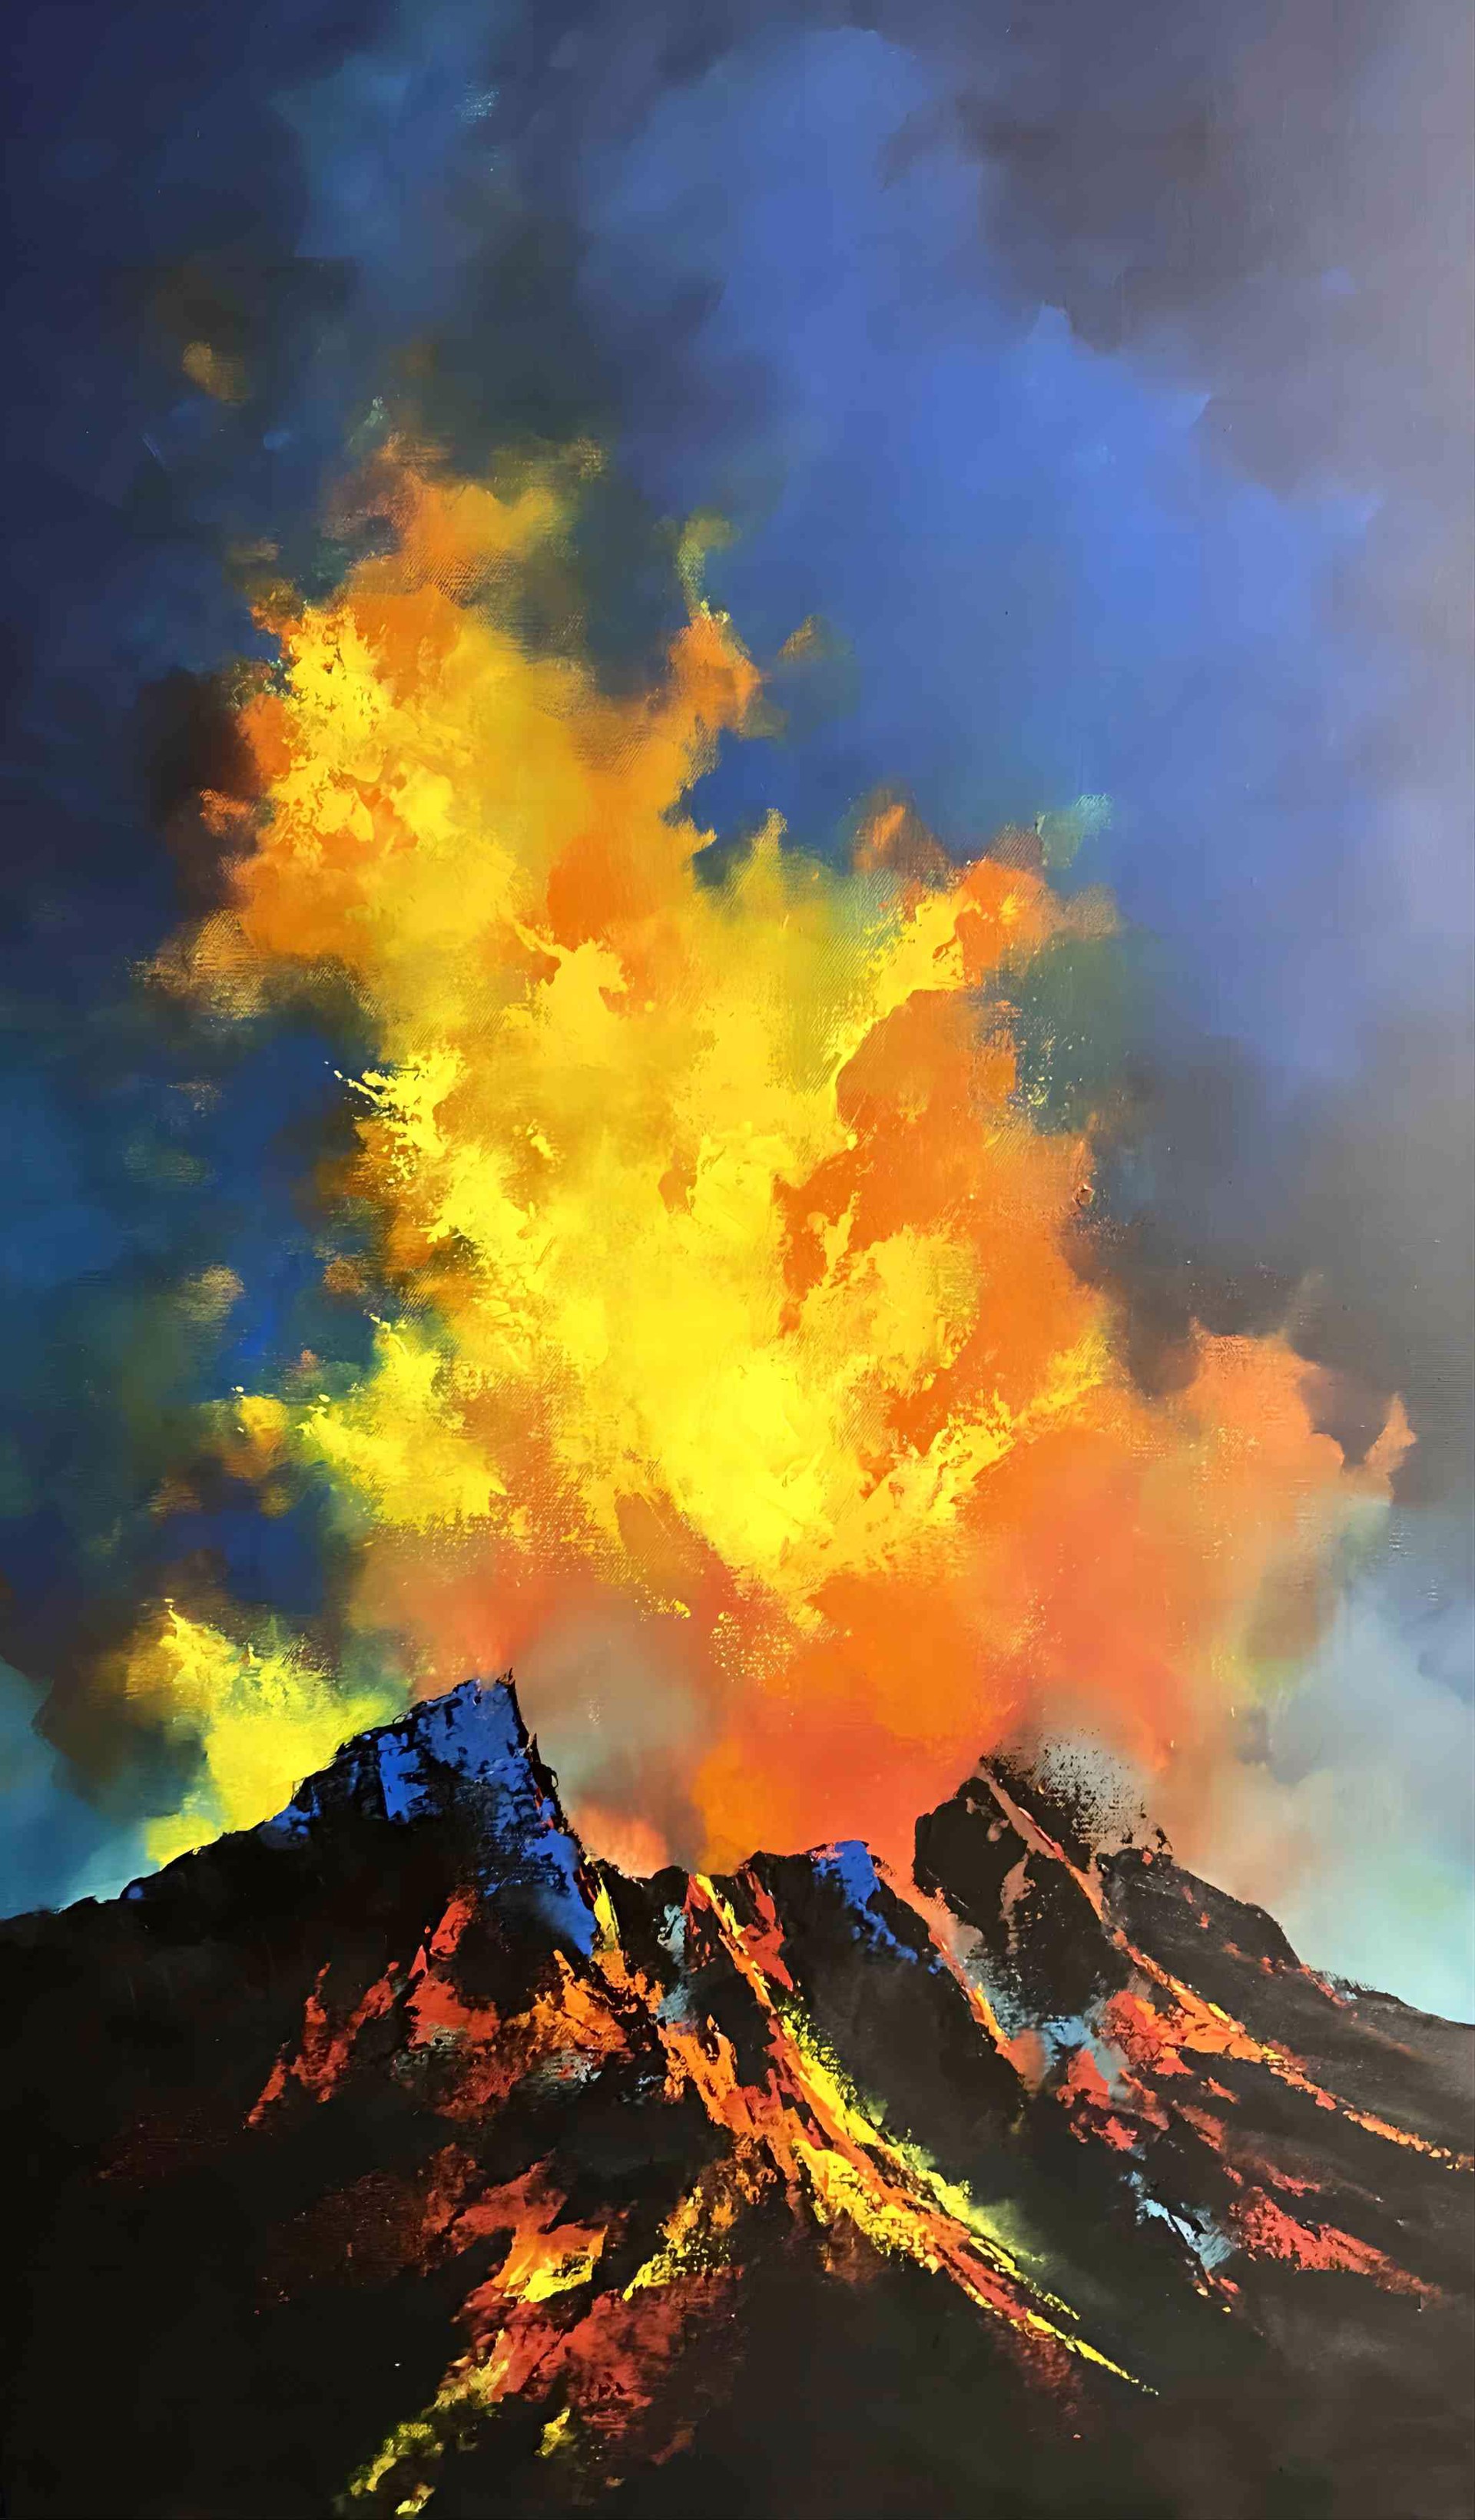 Fire Dragon by Thomas Leung